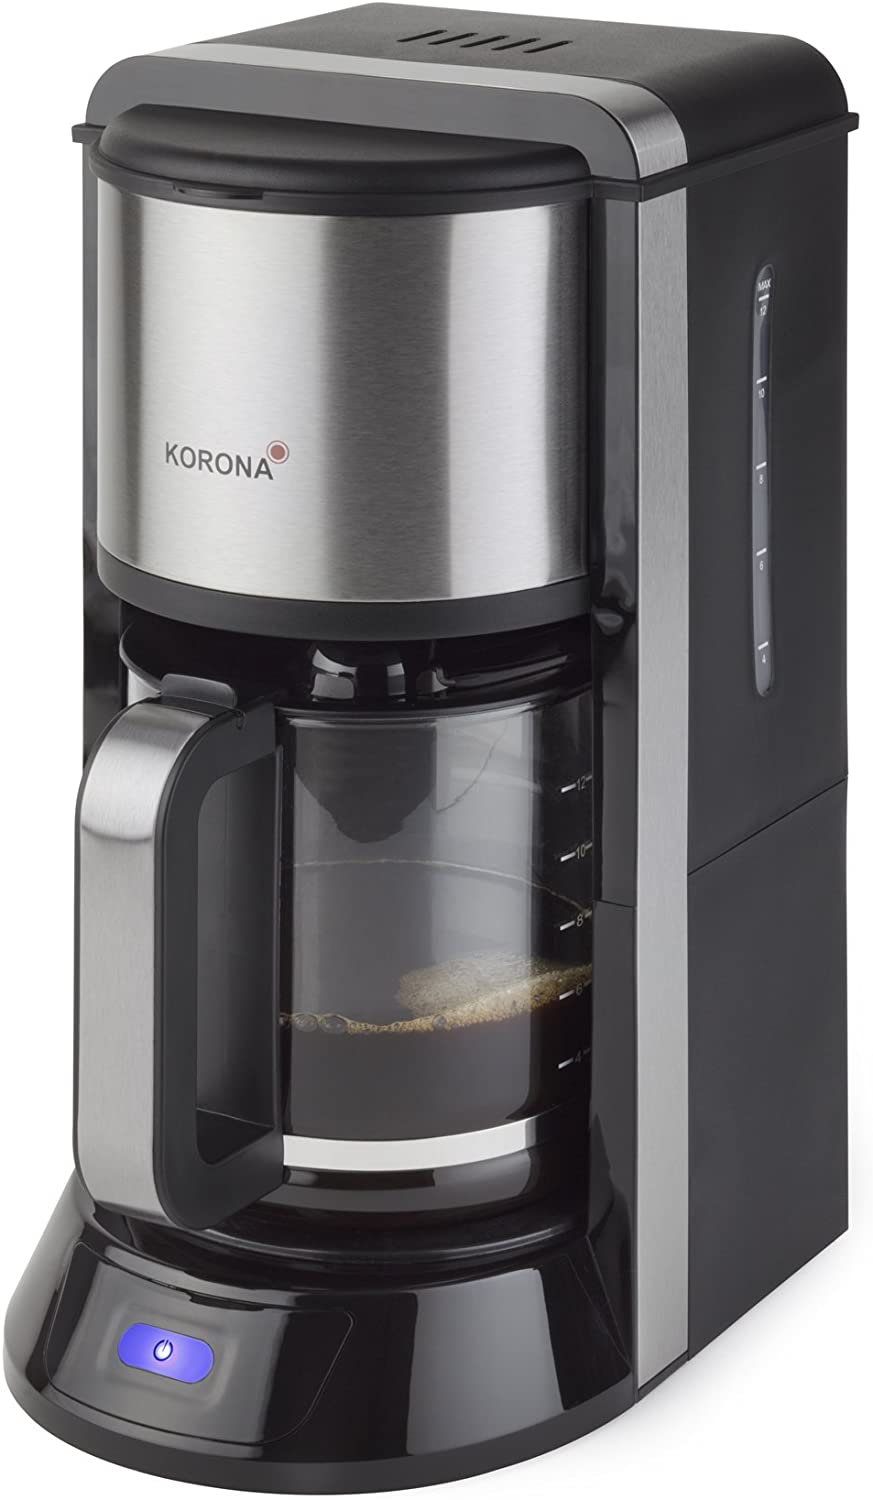 Korona 10290 Coffee Machine Black Stainless Steel 1000 Watt High-Quality in Shape and Workmanship Metallic